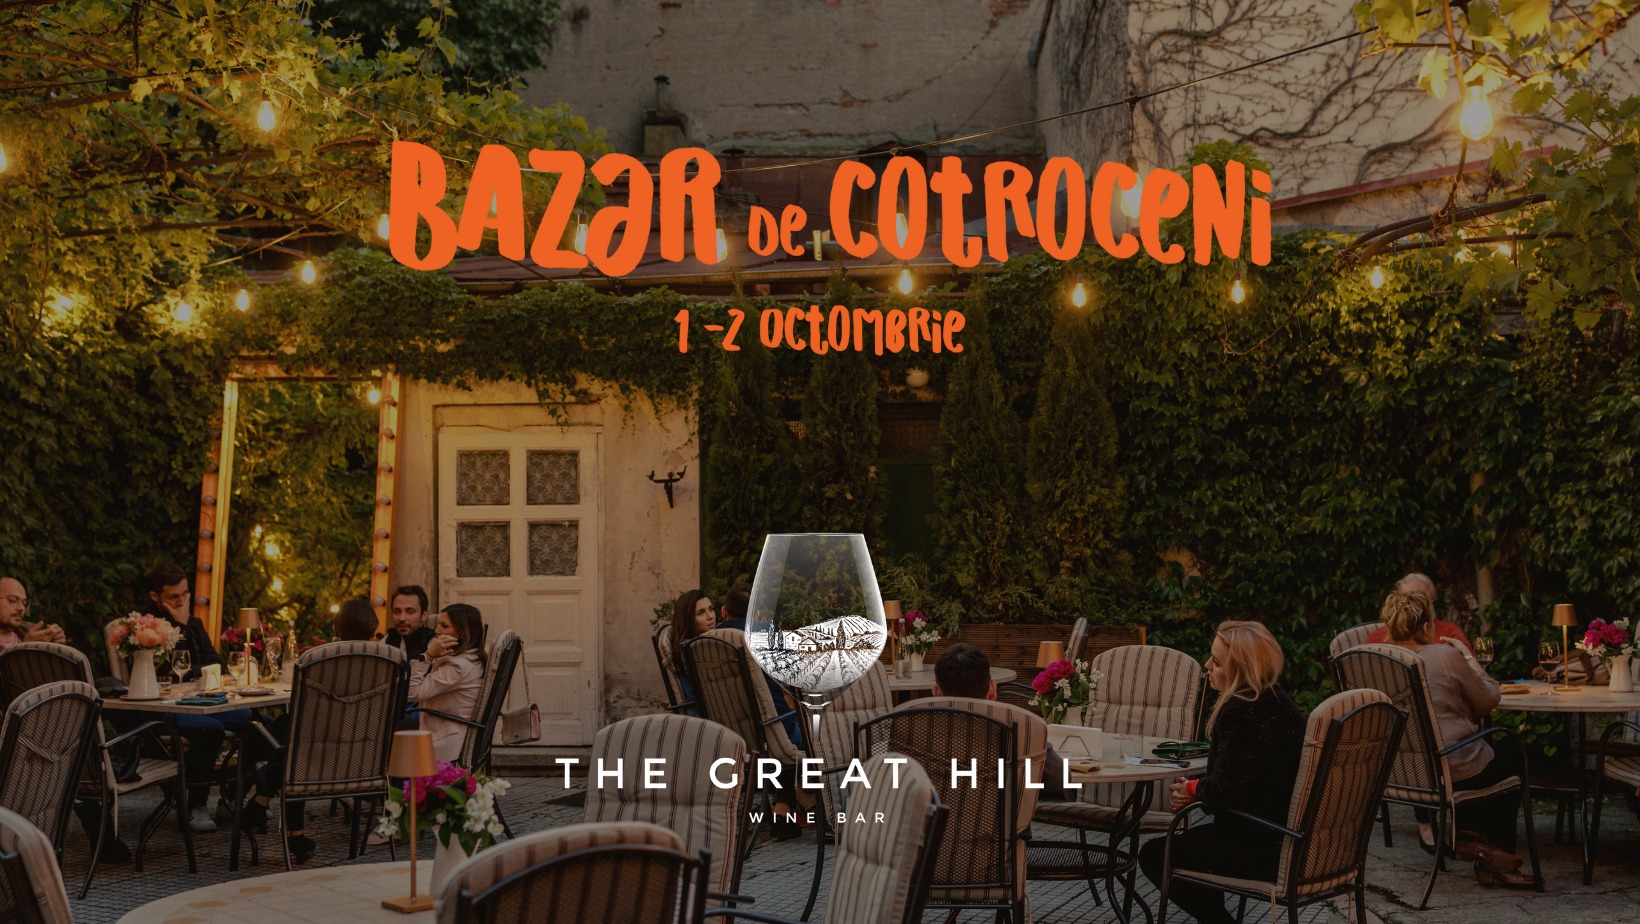 The Great Hill @ Bazar de Cotroceni (Bucuresti)